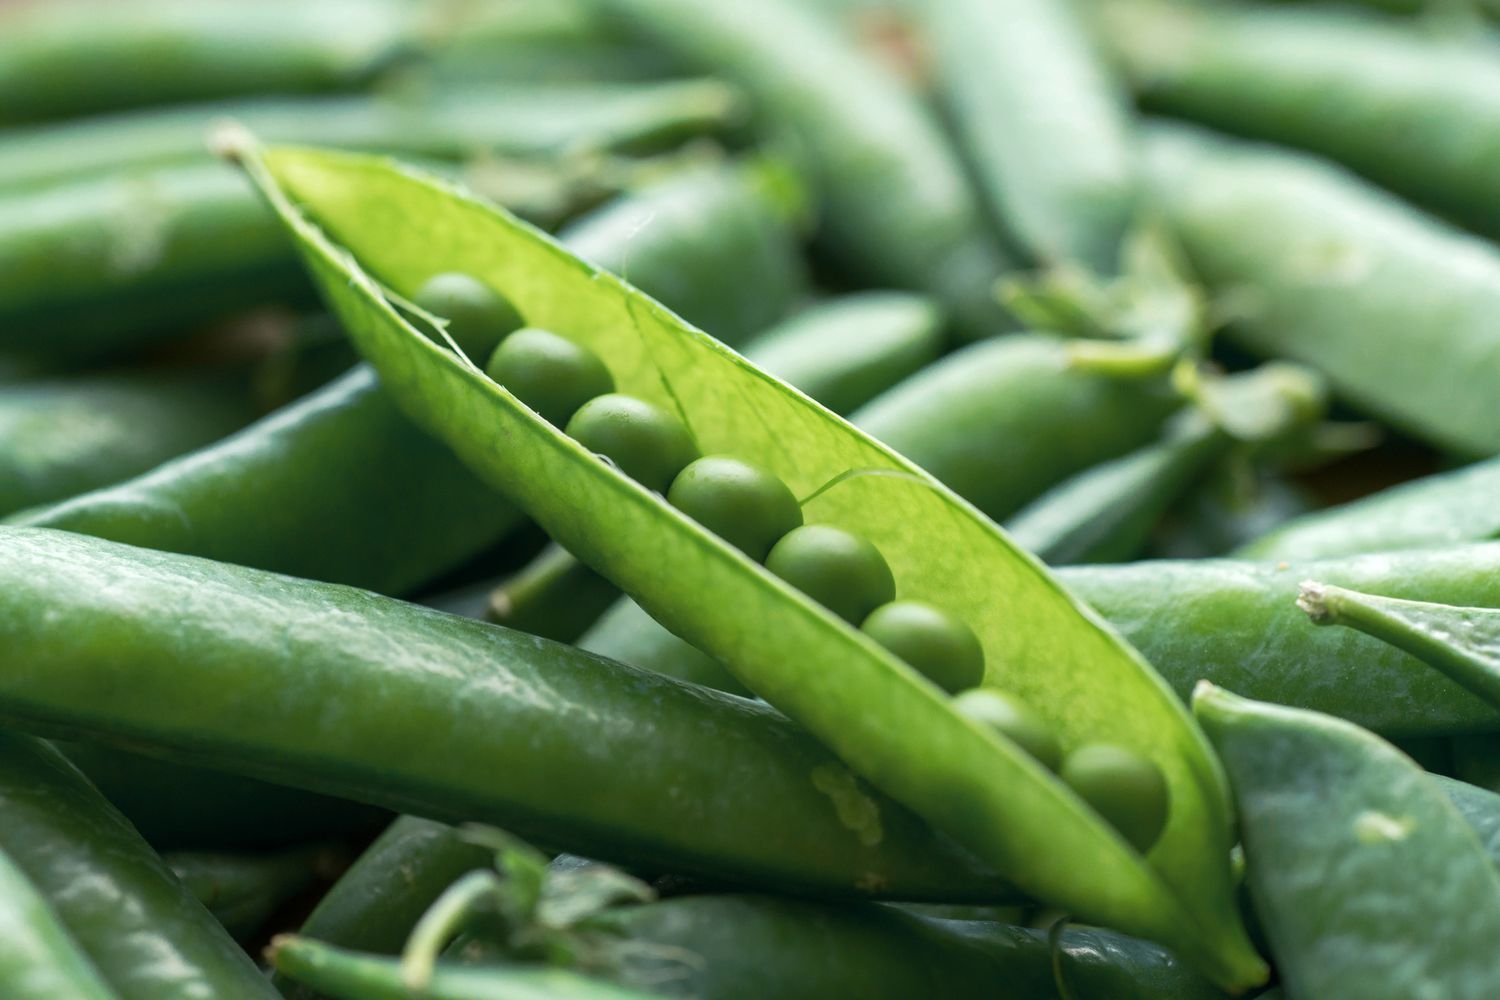 Close-up of peas